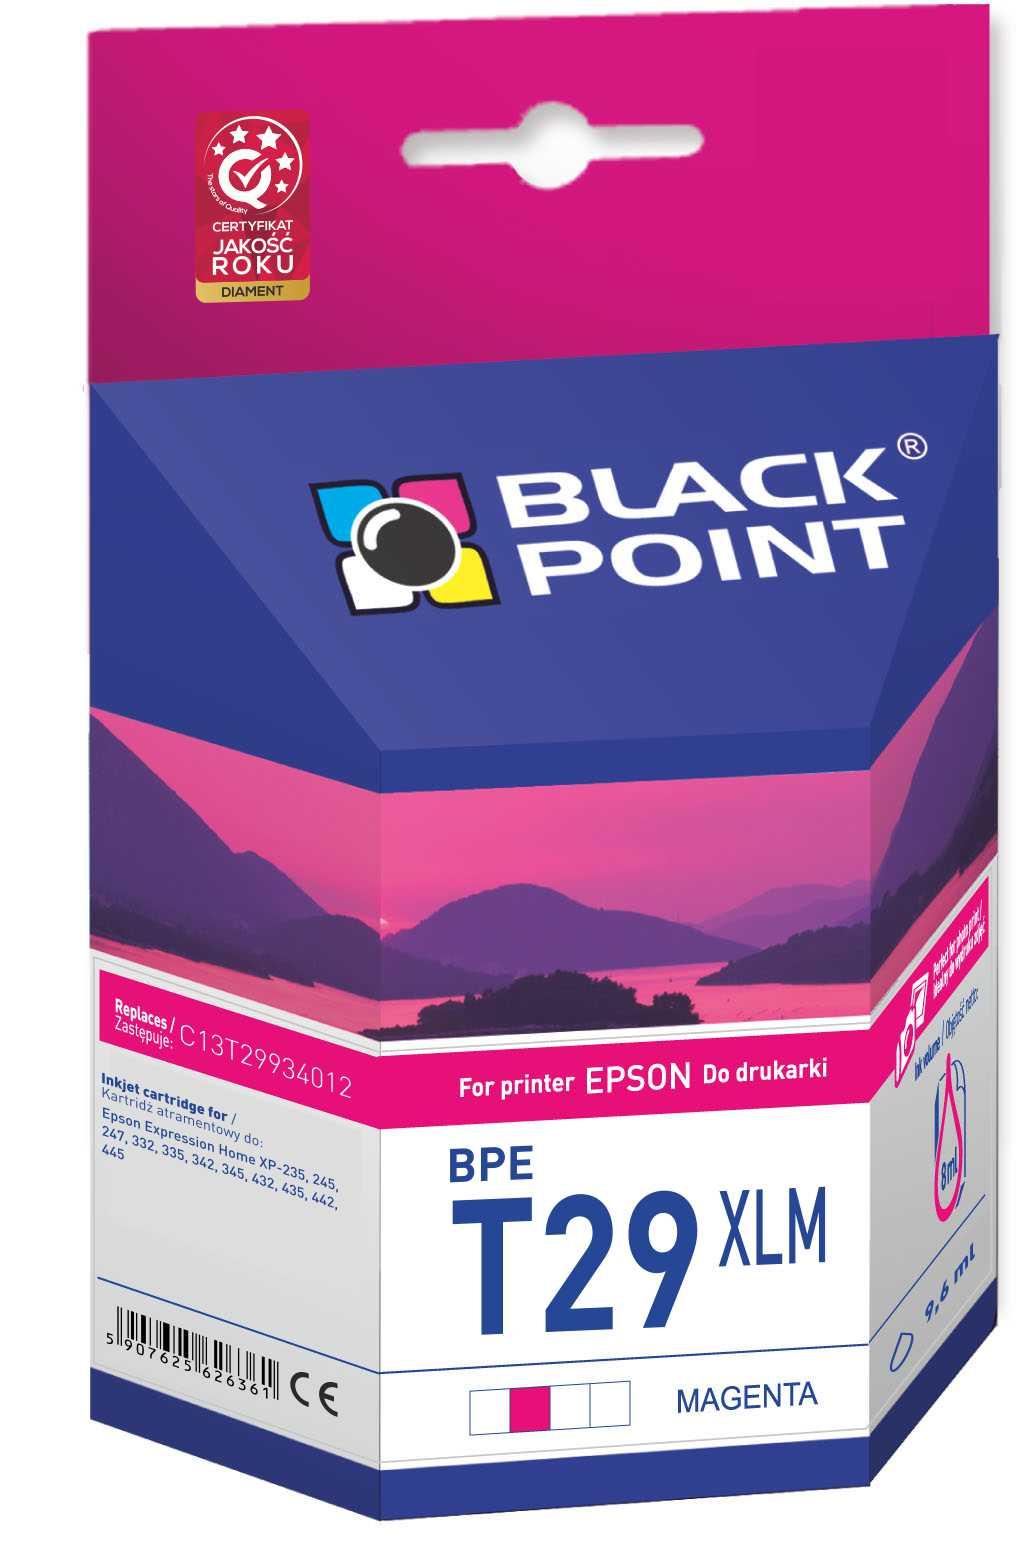 CMYK - Black Point tusz BPET29XLM zastpuje Epson C13T29934012, magenta
